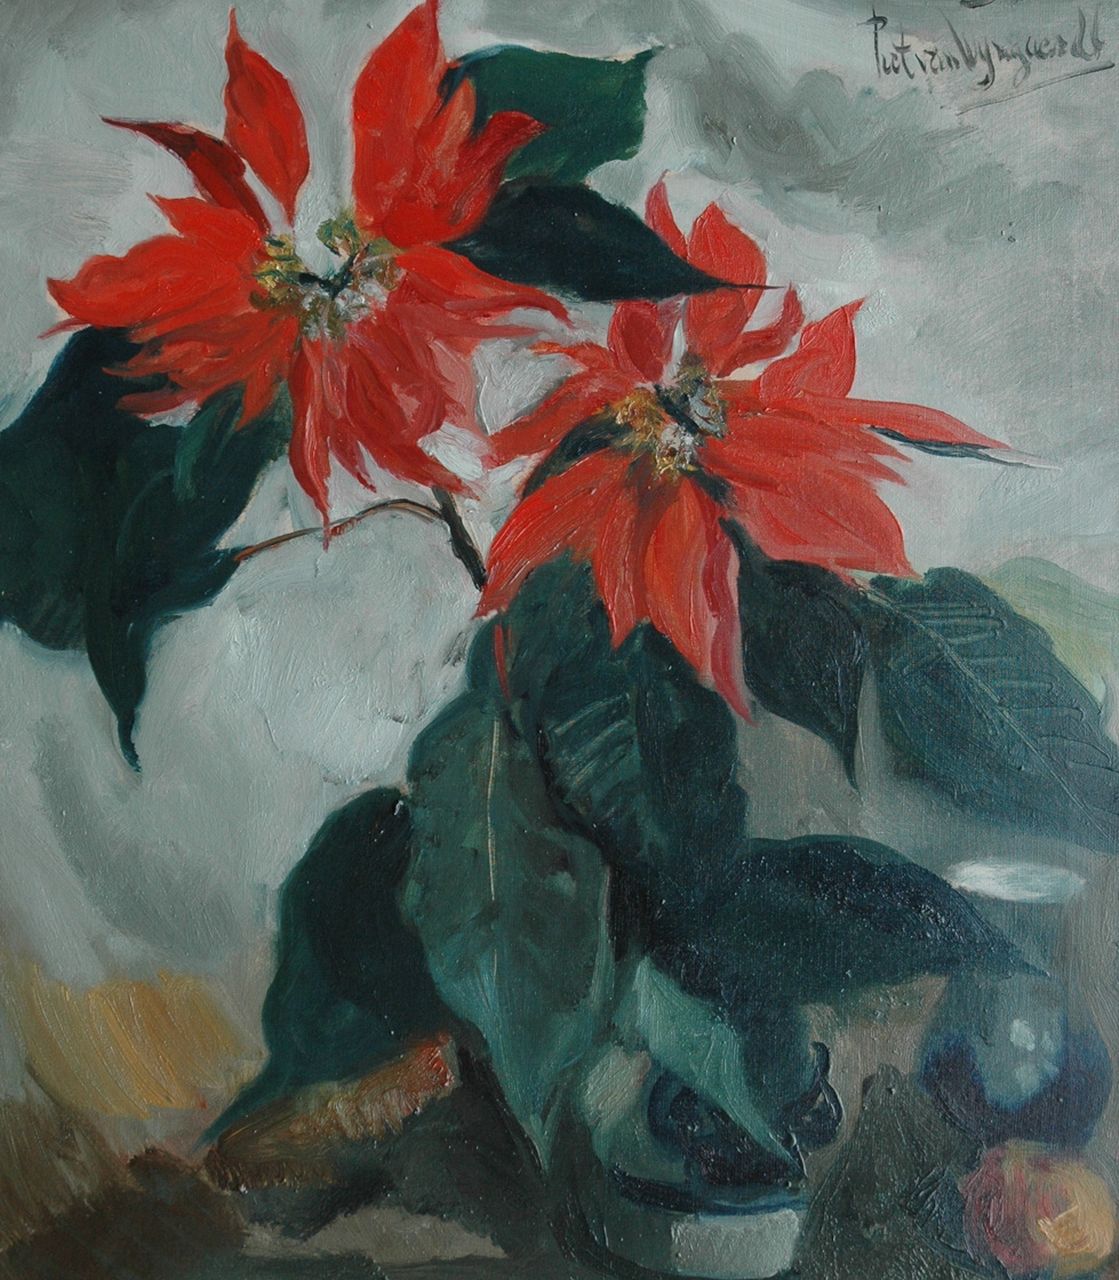 Wijngaerdt P.T. van | Petrus Theodorus 'Piet' van Wijngaerdt, Christmas flowers and rennet apples, oil on canvas 80.1 x 70.6 cm, signed u.r.